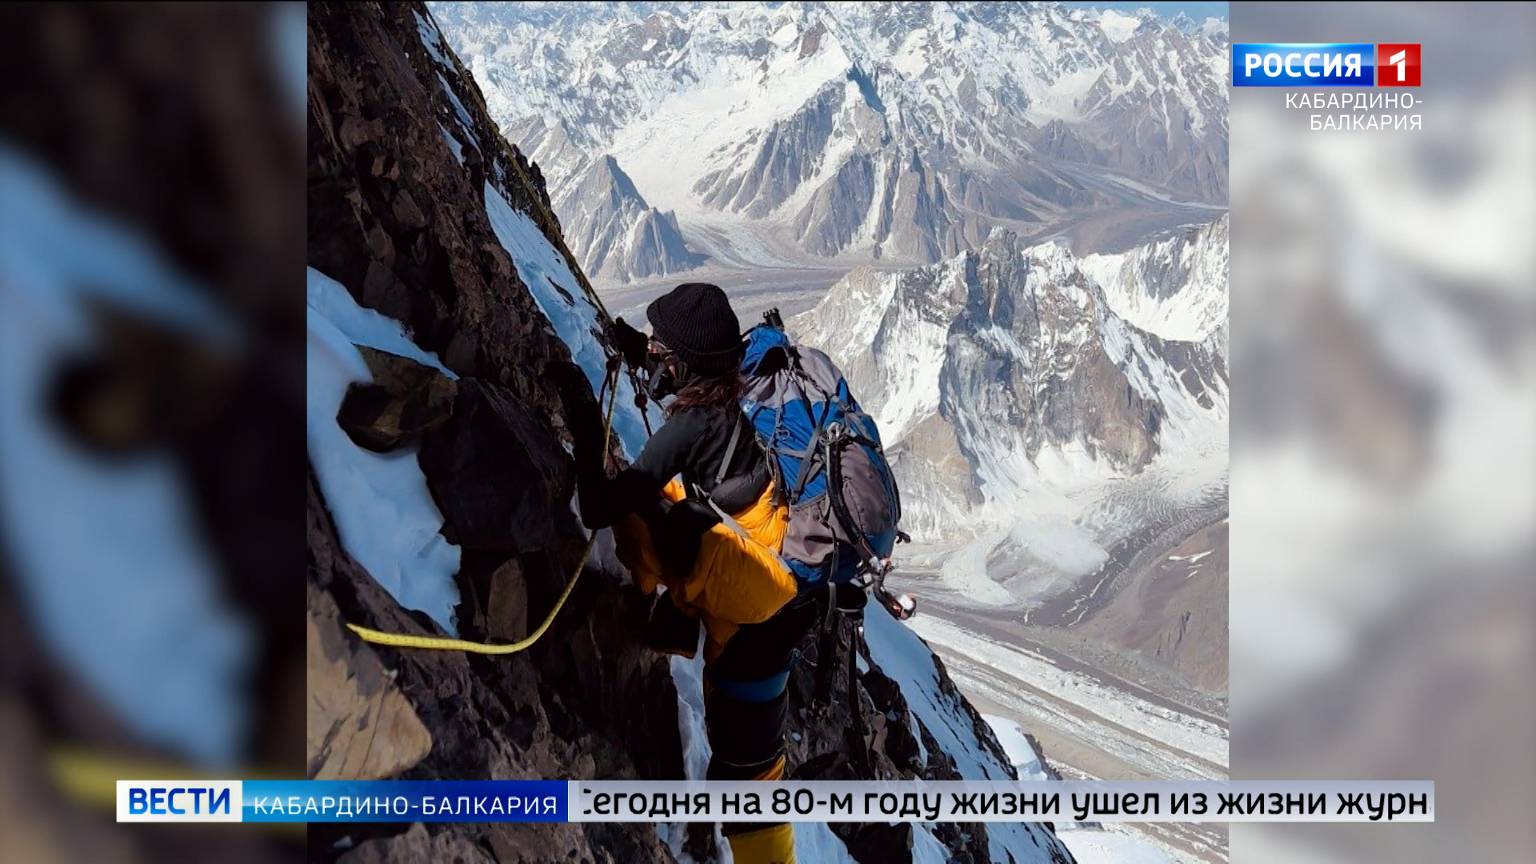 Альпинистка из КБР Алина Пекова взошла на вершину Гашербрум-2